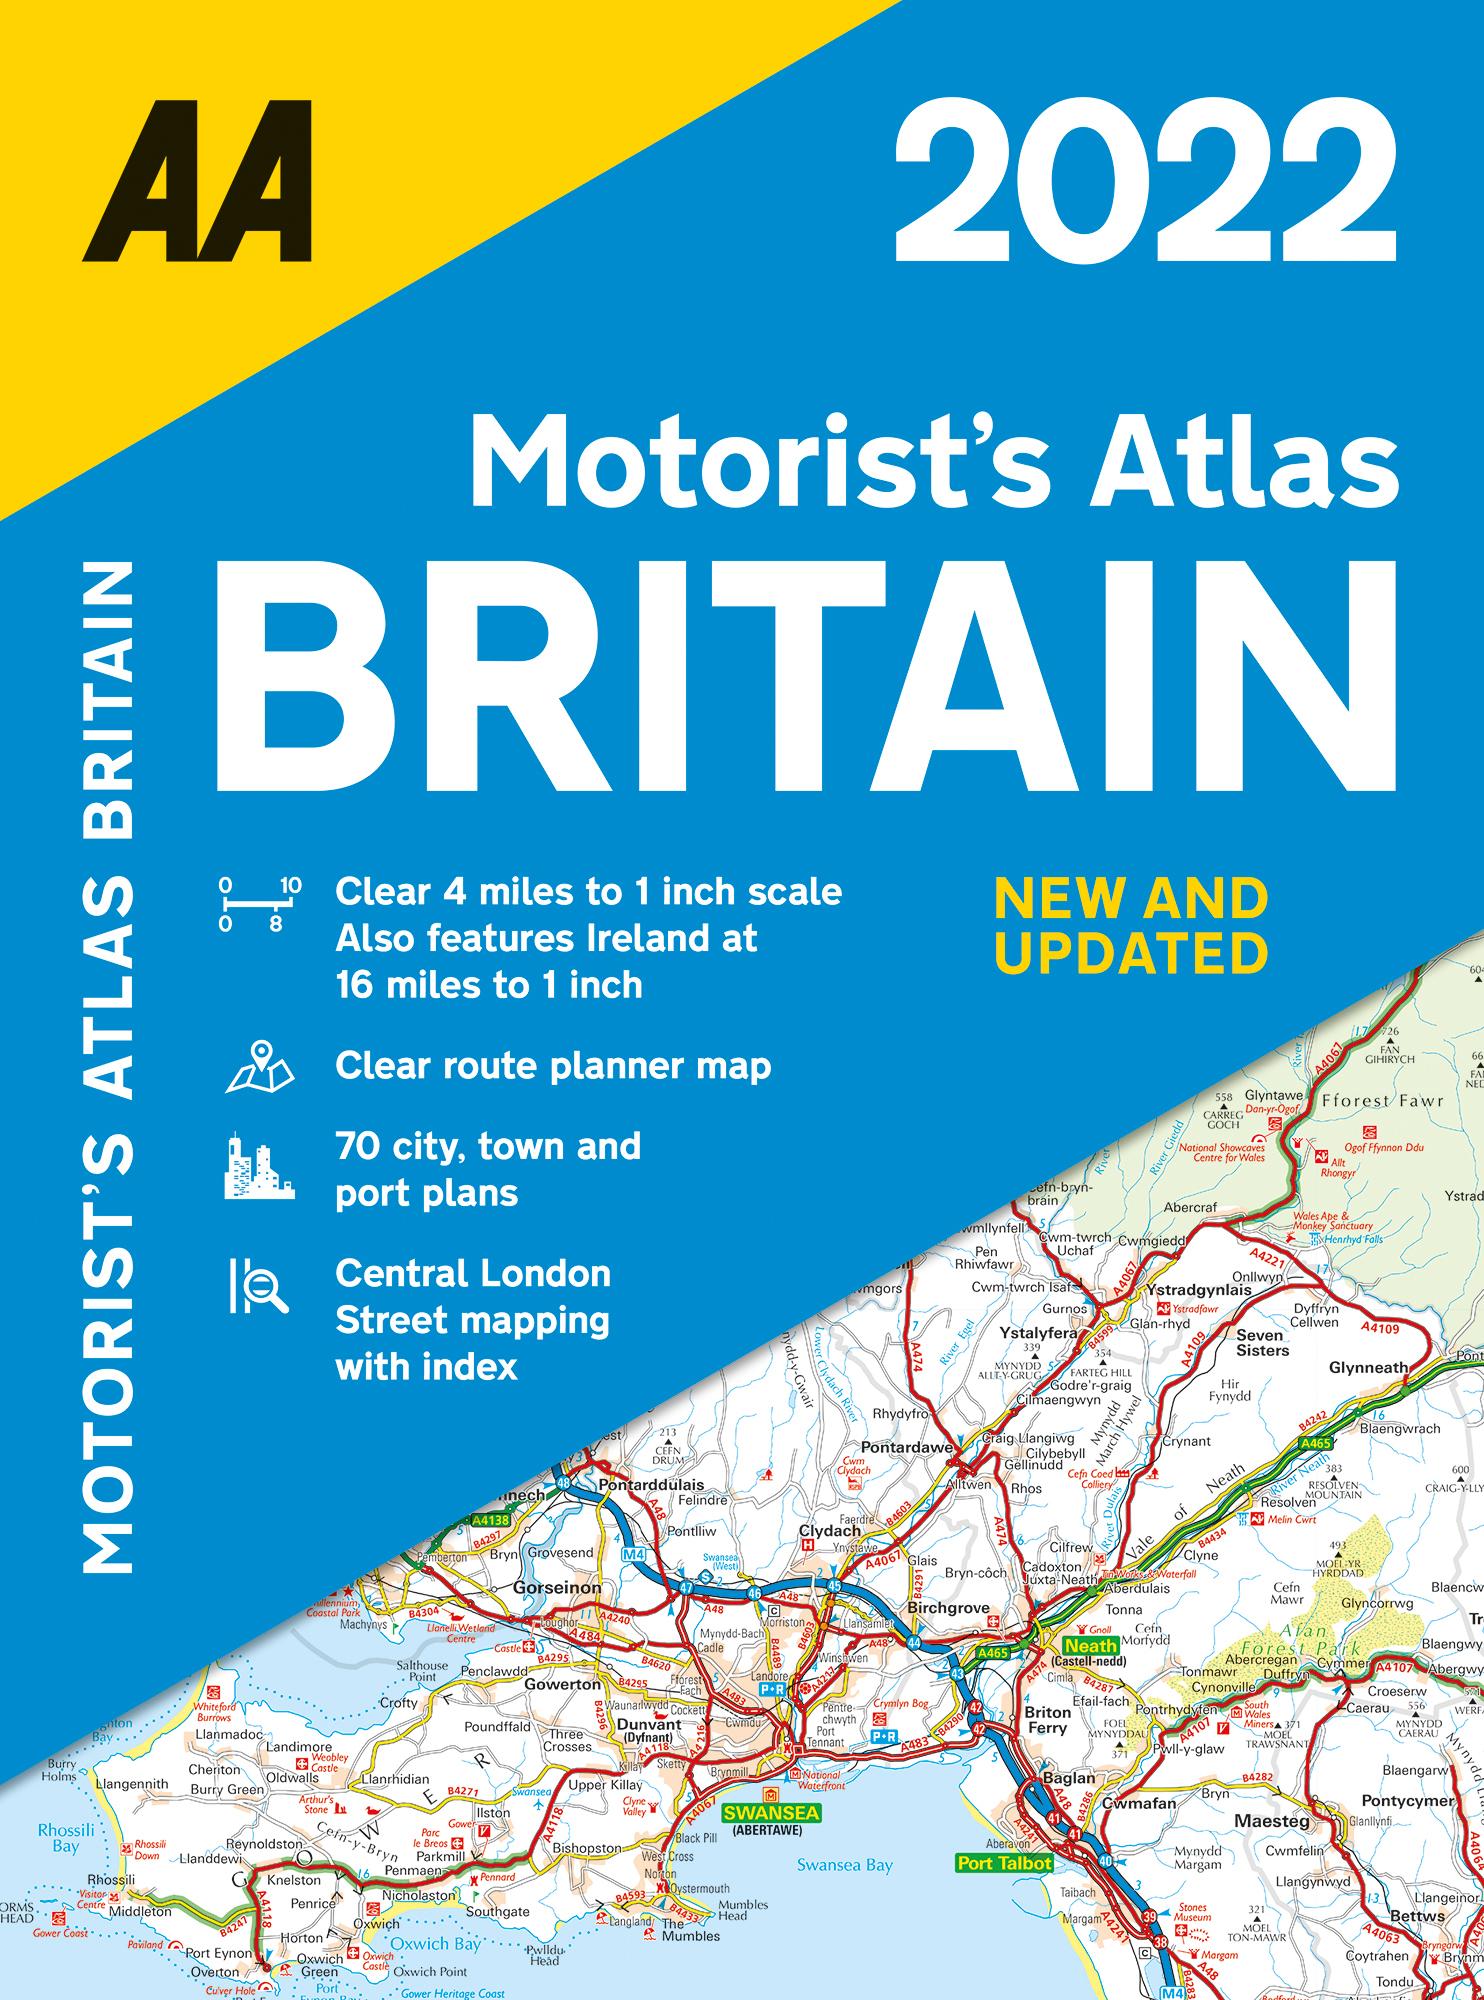 Motorists Atlas Britain 2022